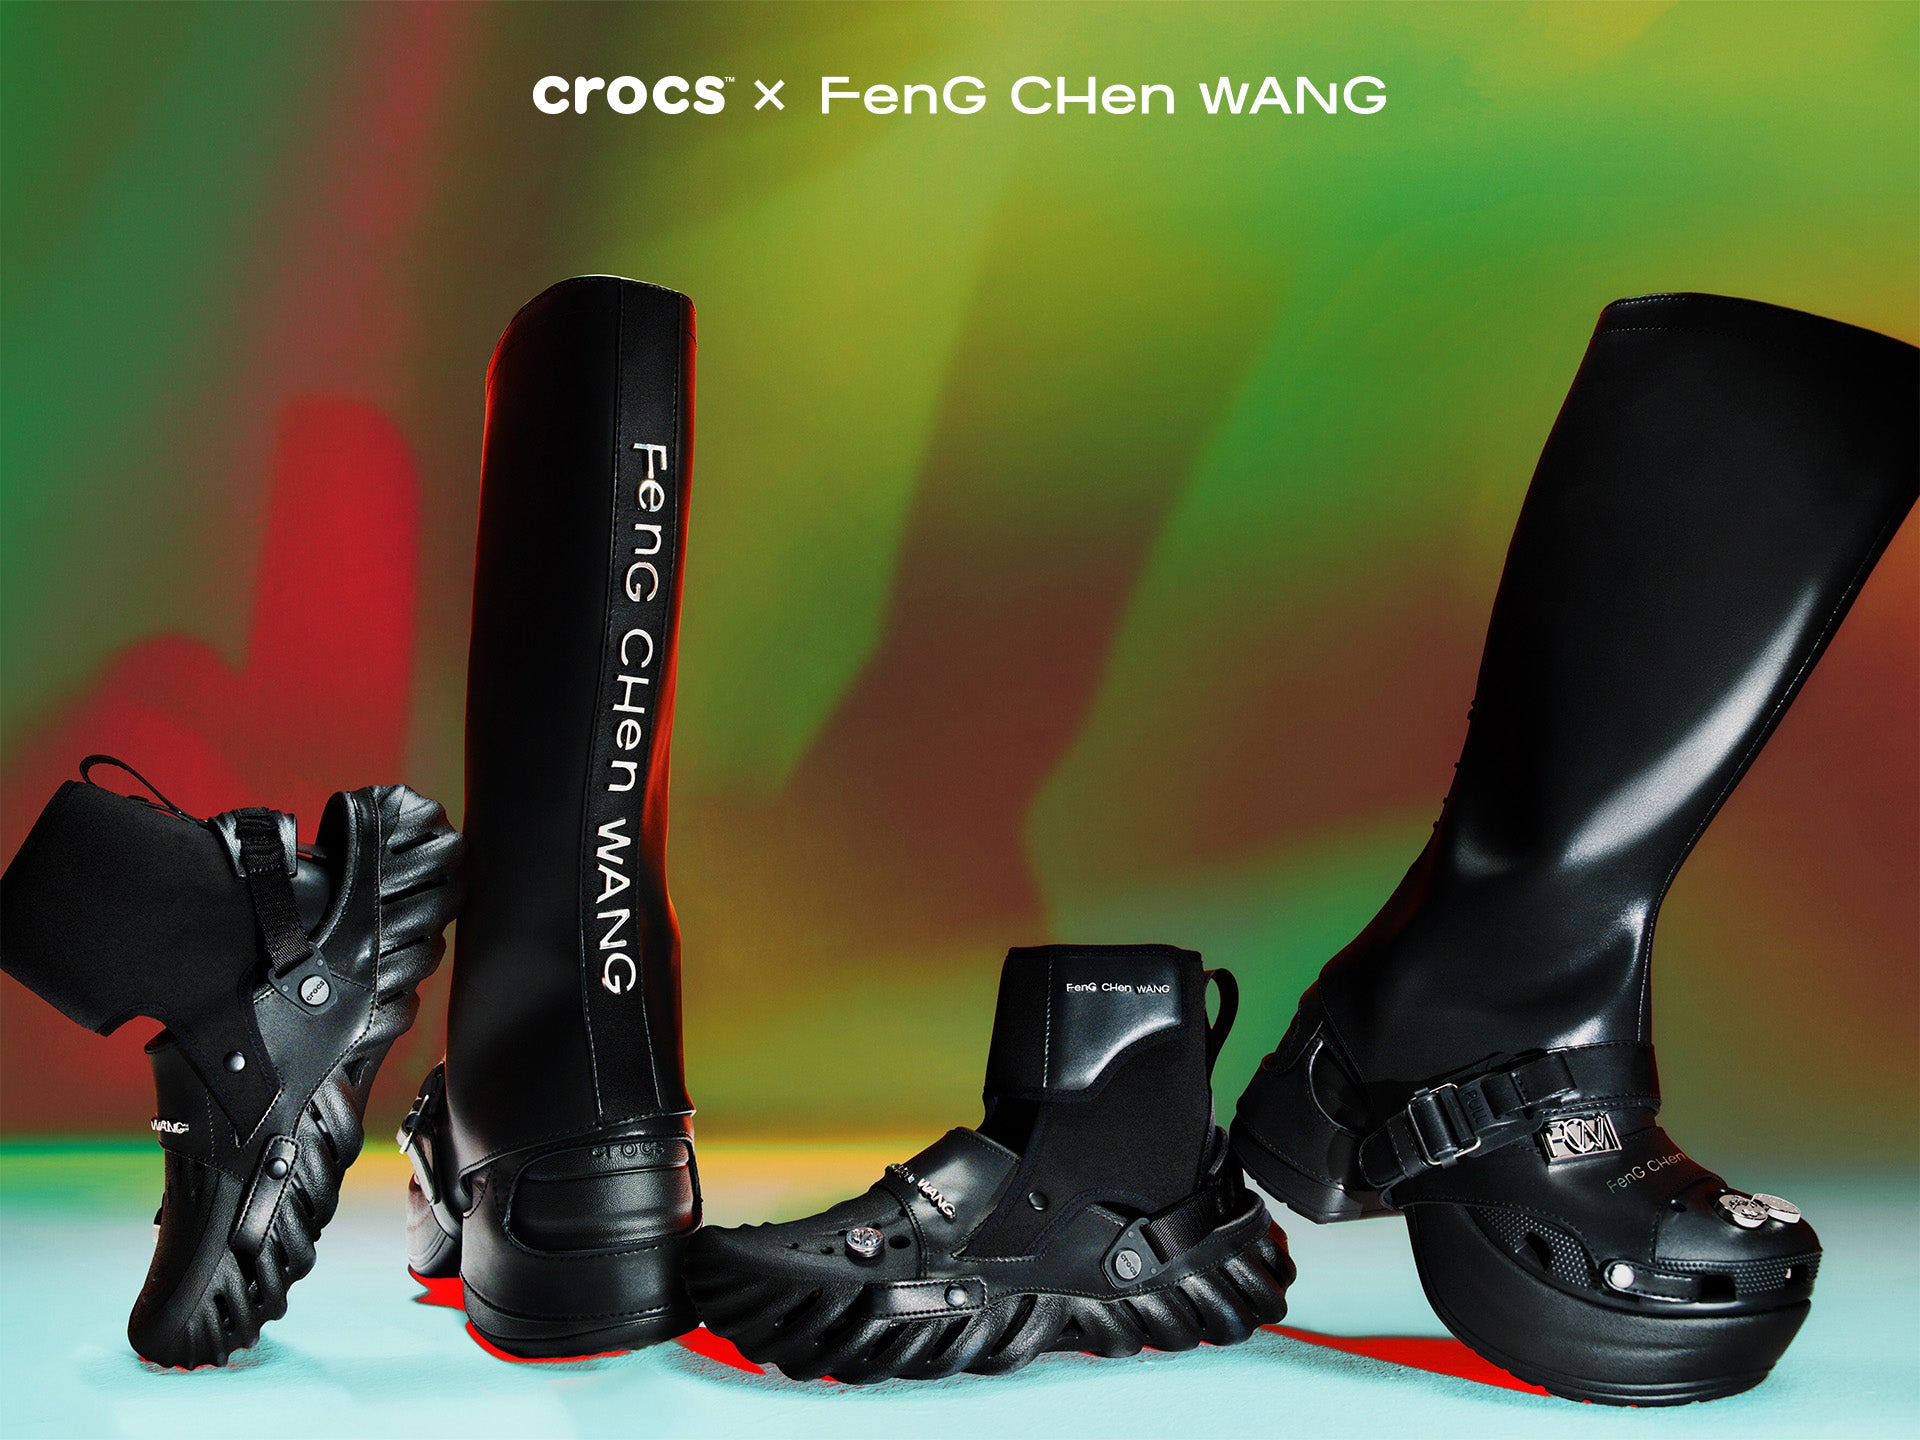 正規取扱店購入US5 CROCS FENG CHEN WANG SIREN CLOG